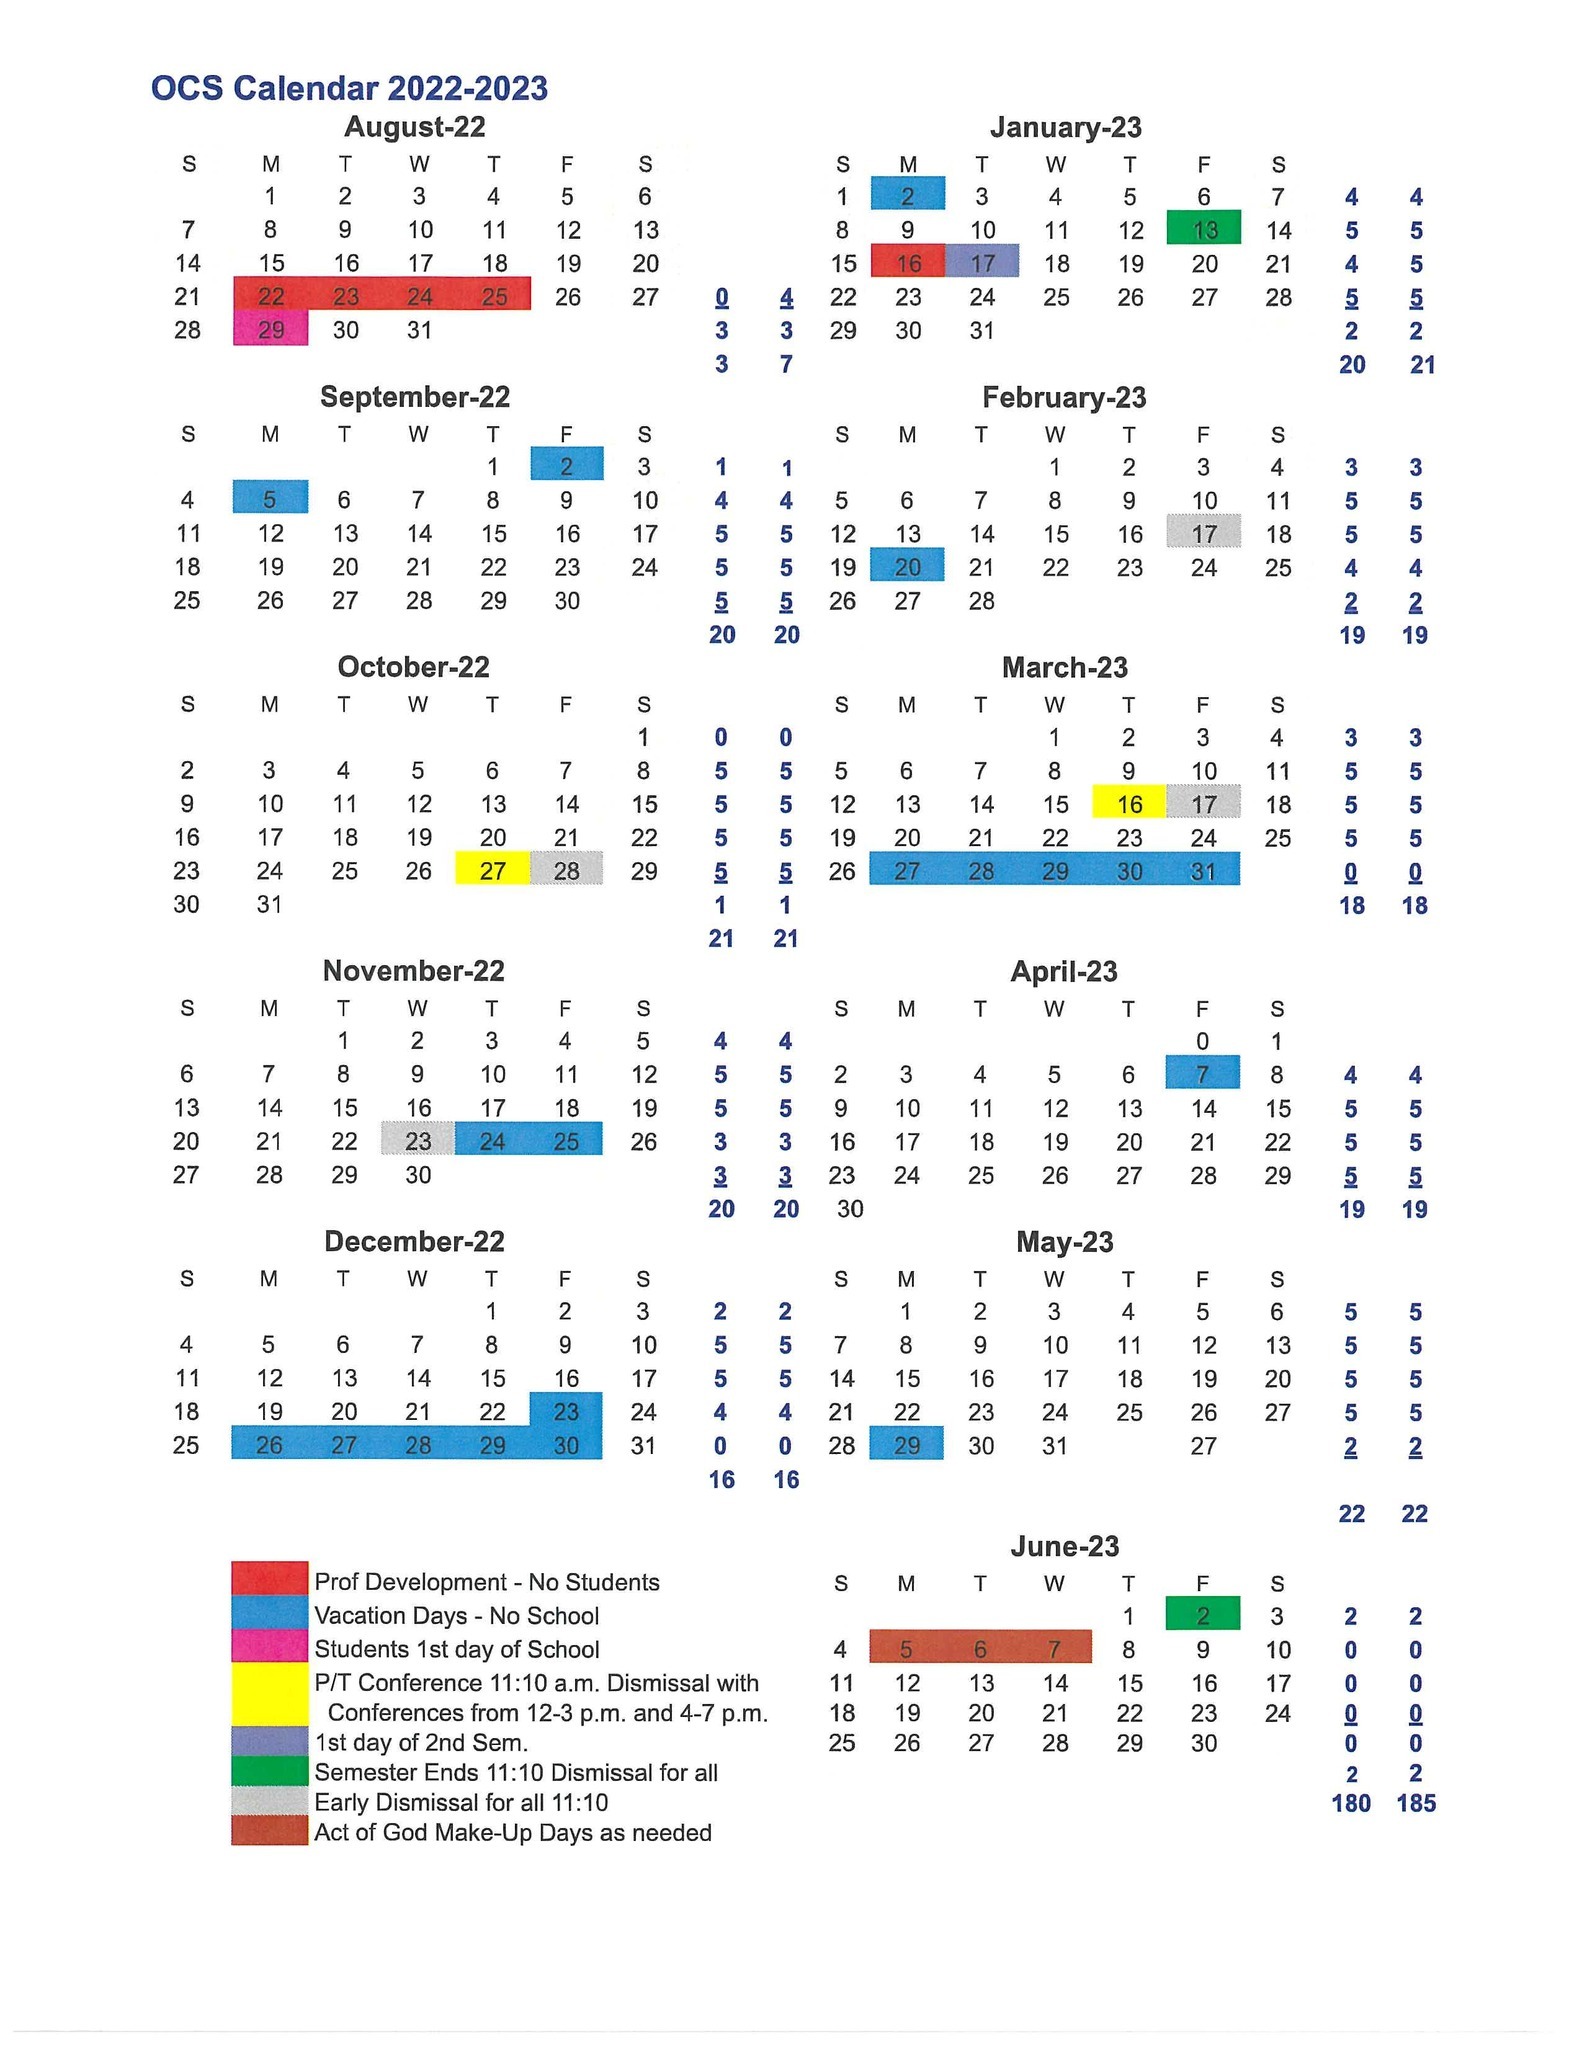 OCS 22-23 District Calendar